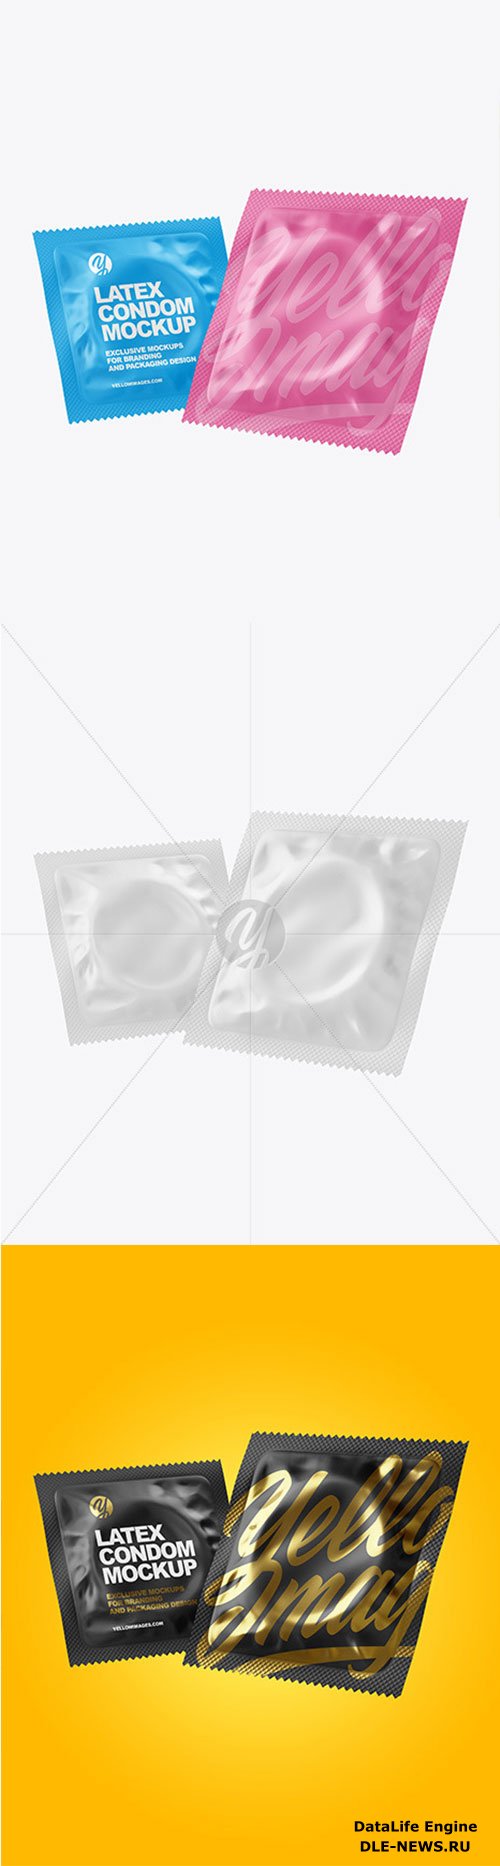 Two Matte Condom Packaging Mockup 70780